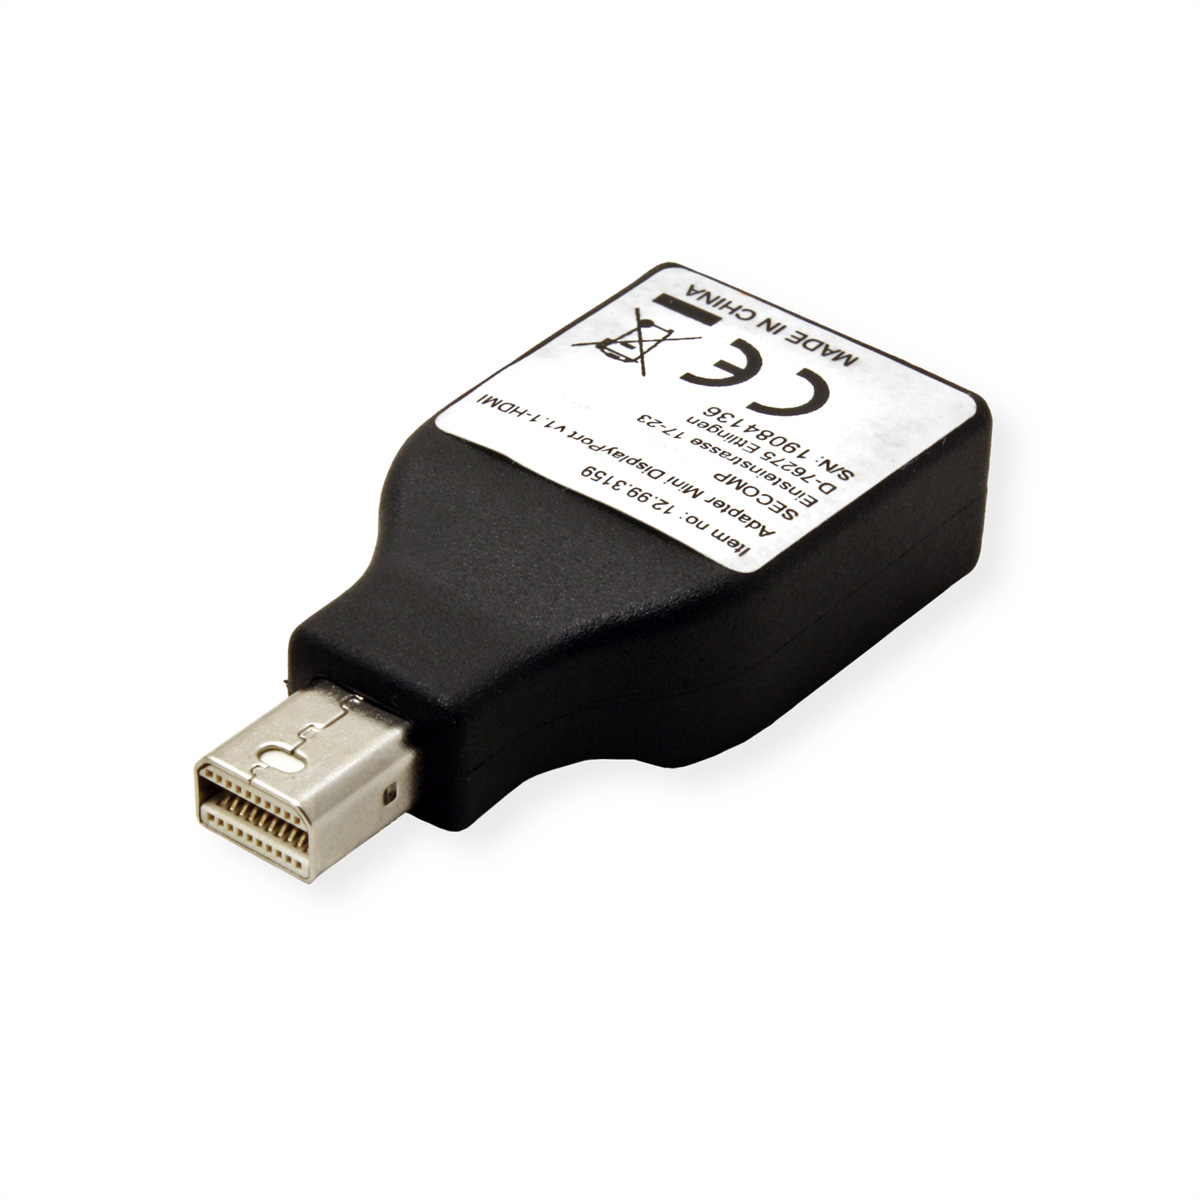 DisplayPort-HDMI DisplayPort-HDMI Mini - Mini Adapter, Adapter DP BU HDMI VALUE Mini ST